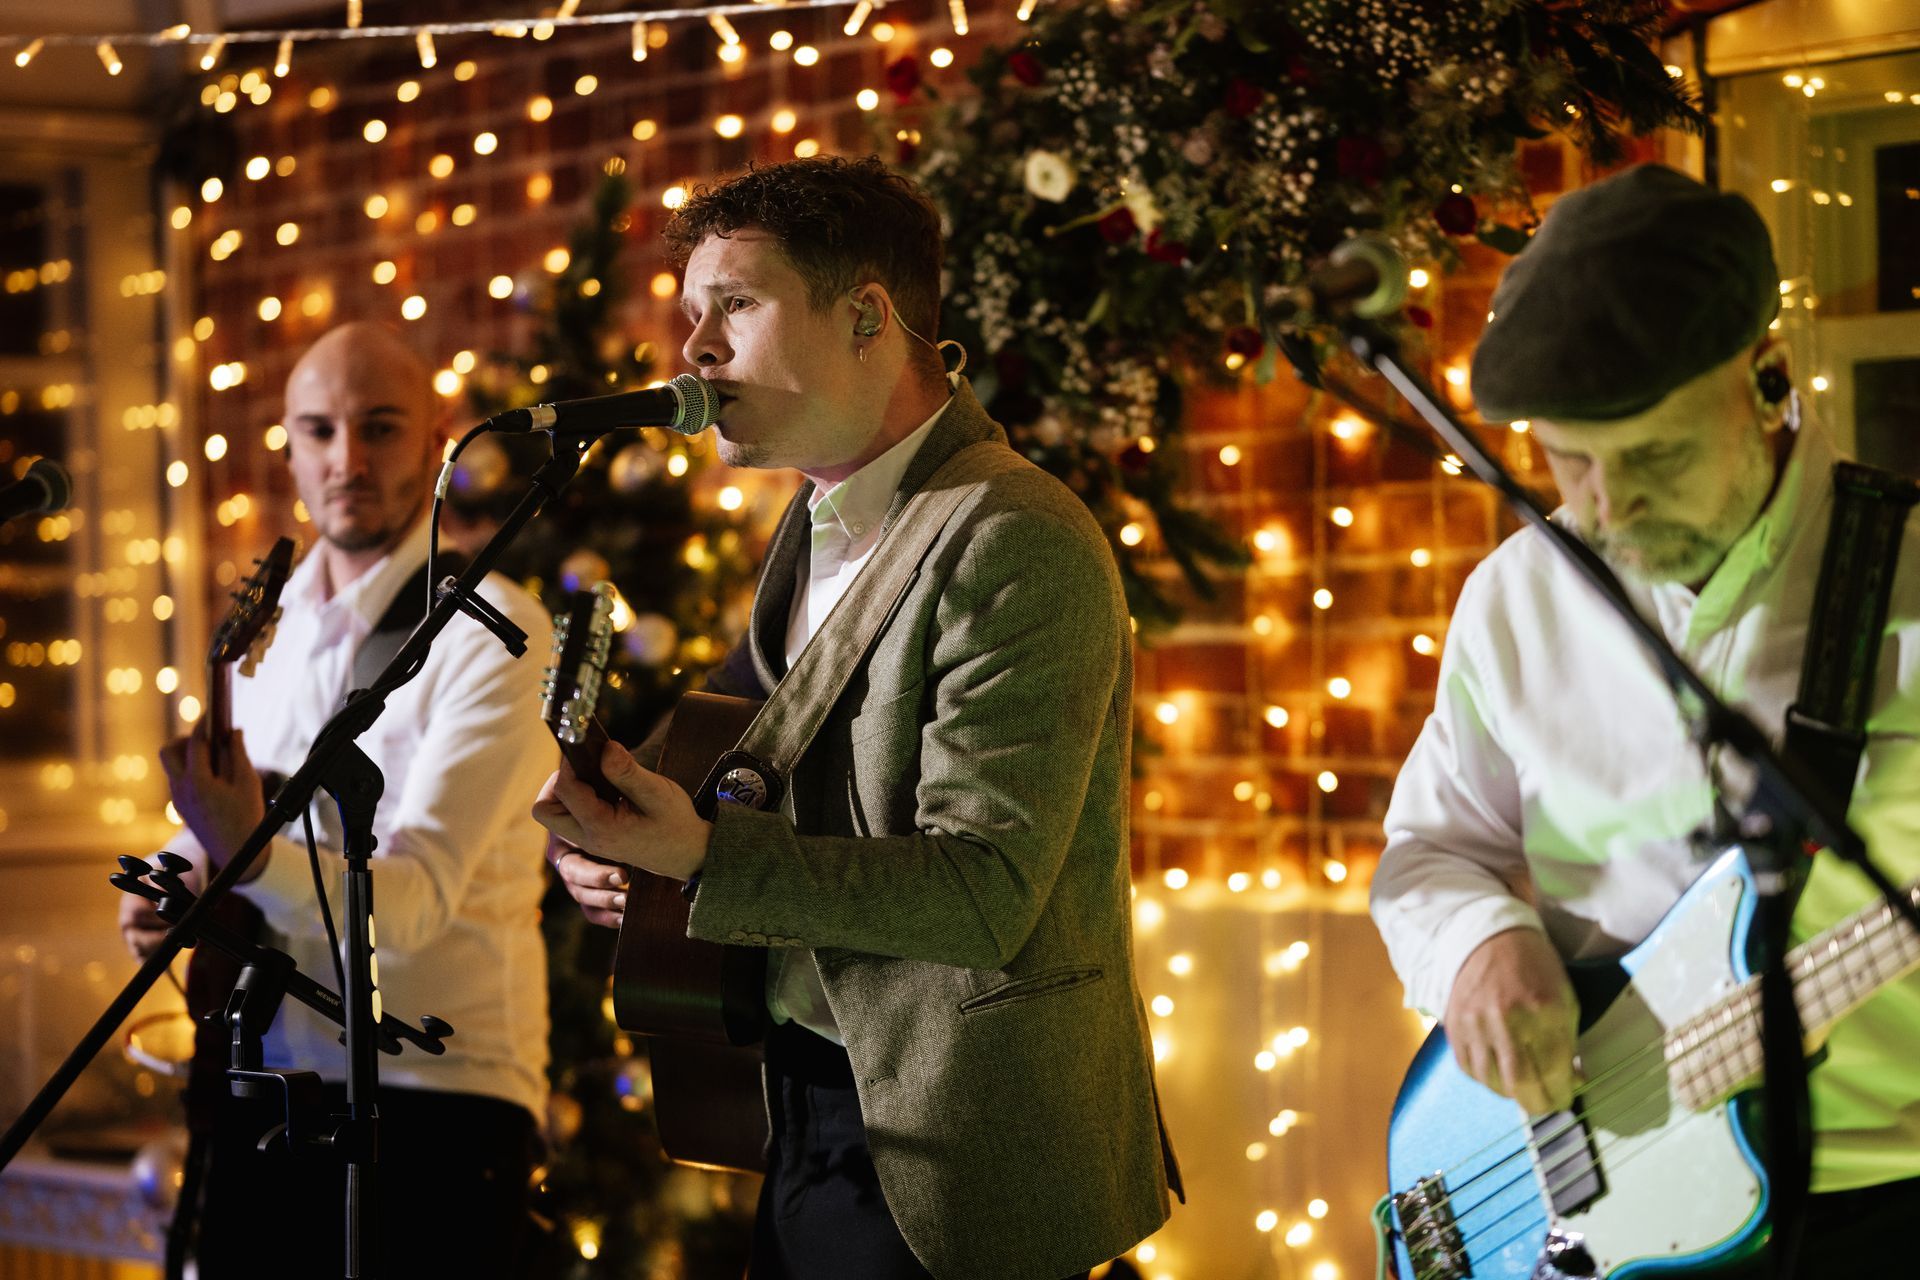 Live band playing at a wedding at Sopley Mill co-ordinated by Tasha Mae Wedding Co-ordinator.